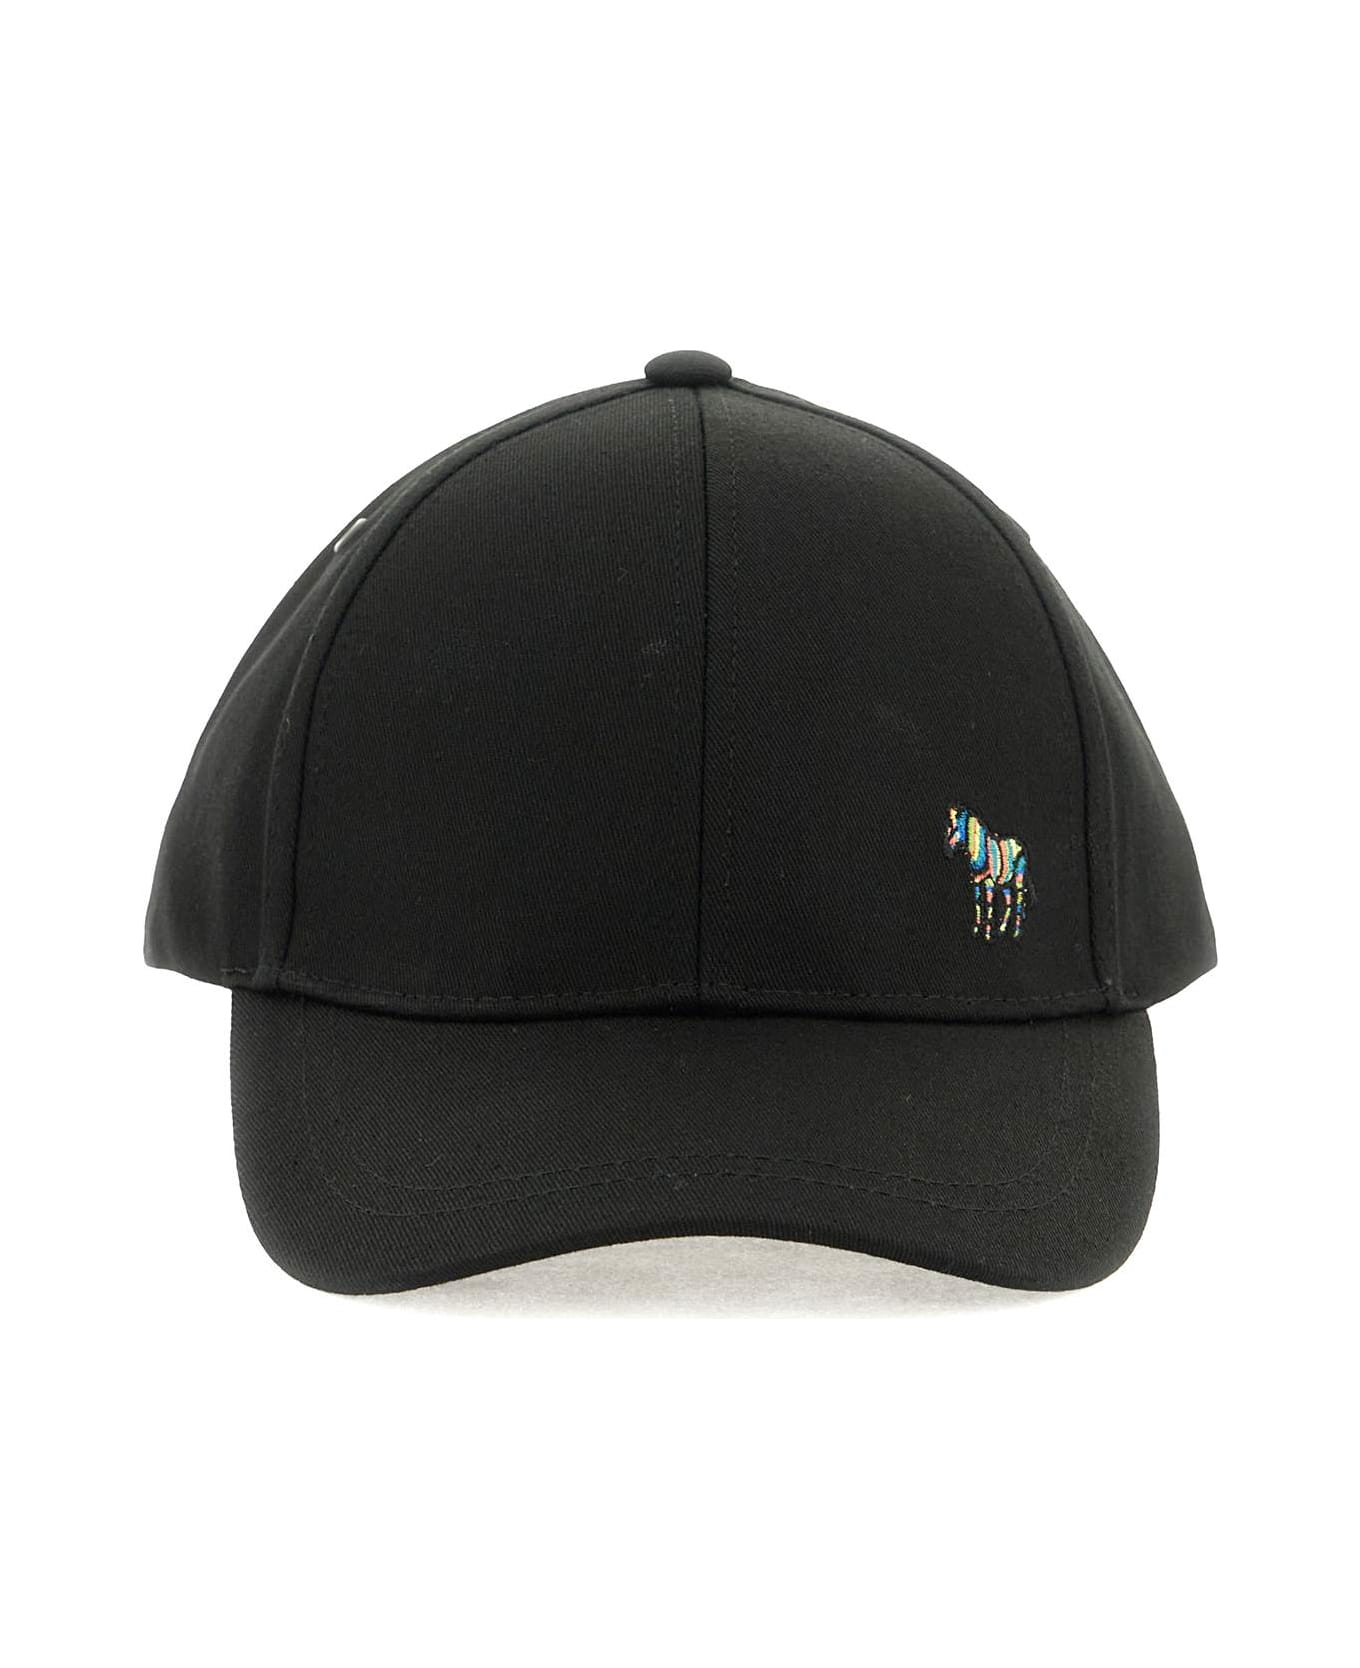 PS by Paul Smith Zebra Logo Baseball Cap - Black 帽子